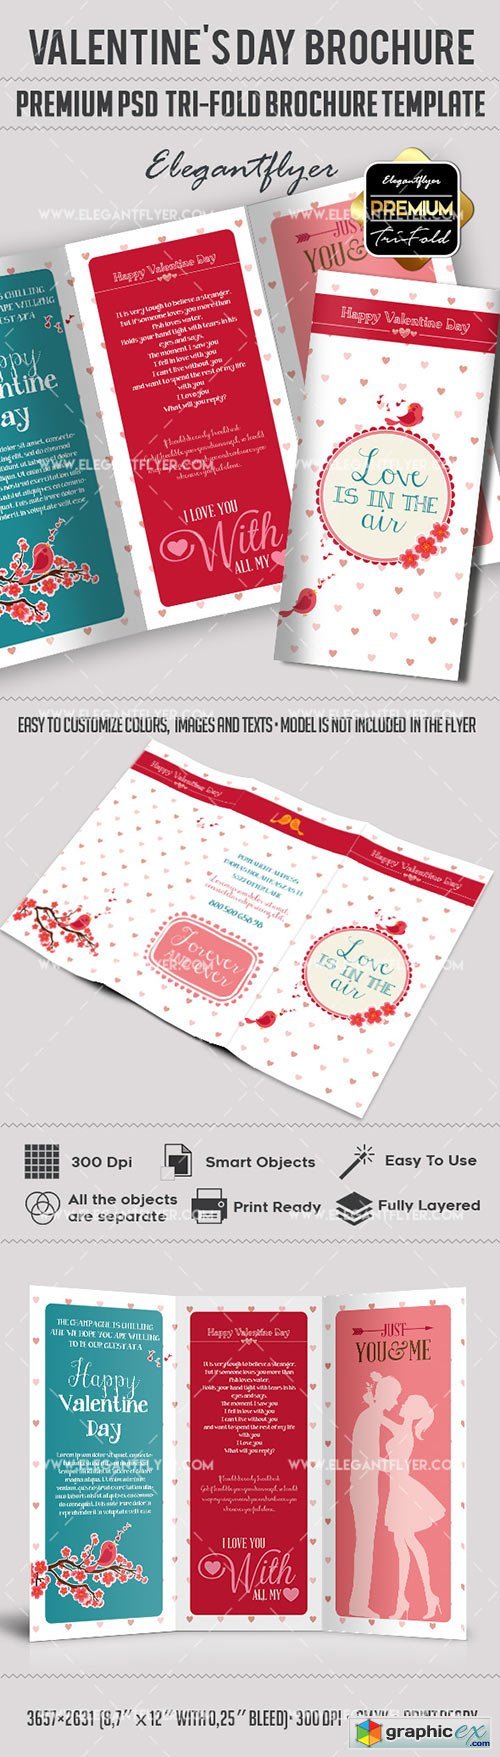 Valentines Day- Premium Tri-Fold PSD Brochure Template